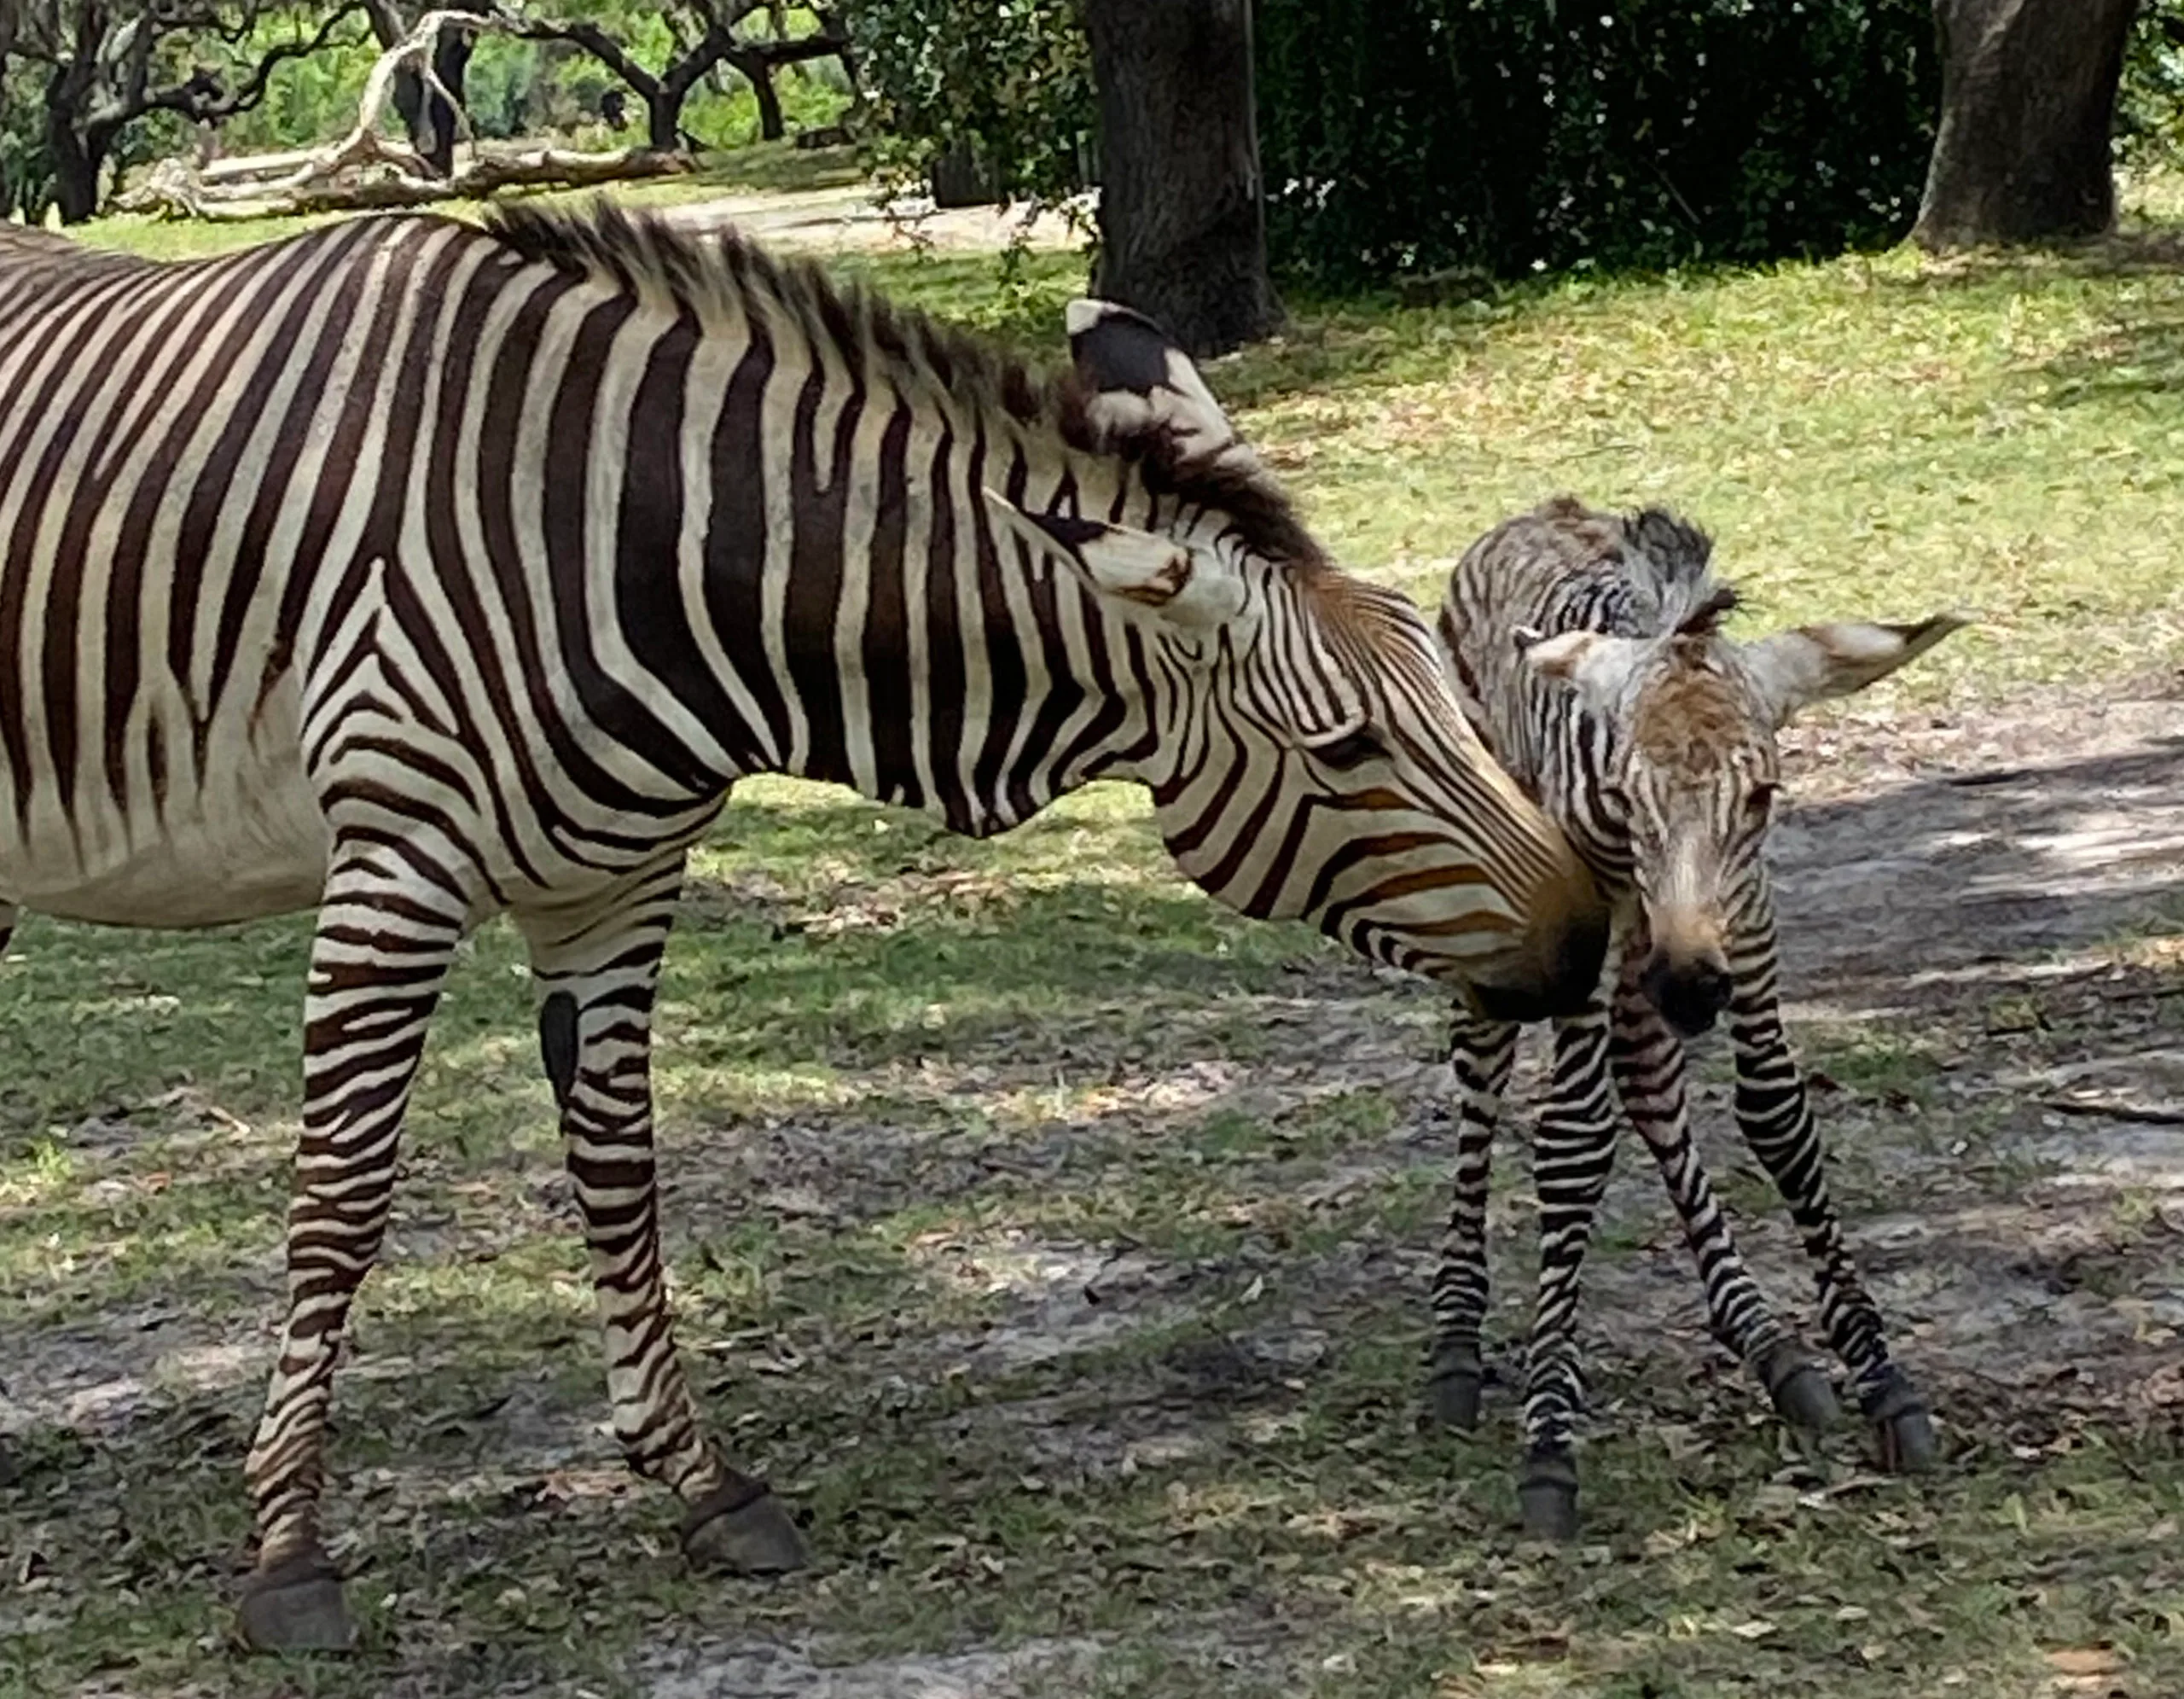 Mama and baby zebra at Disney's Animal Kingdom